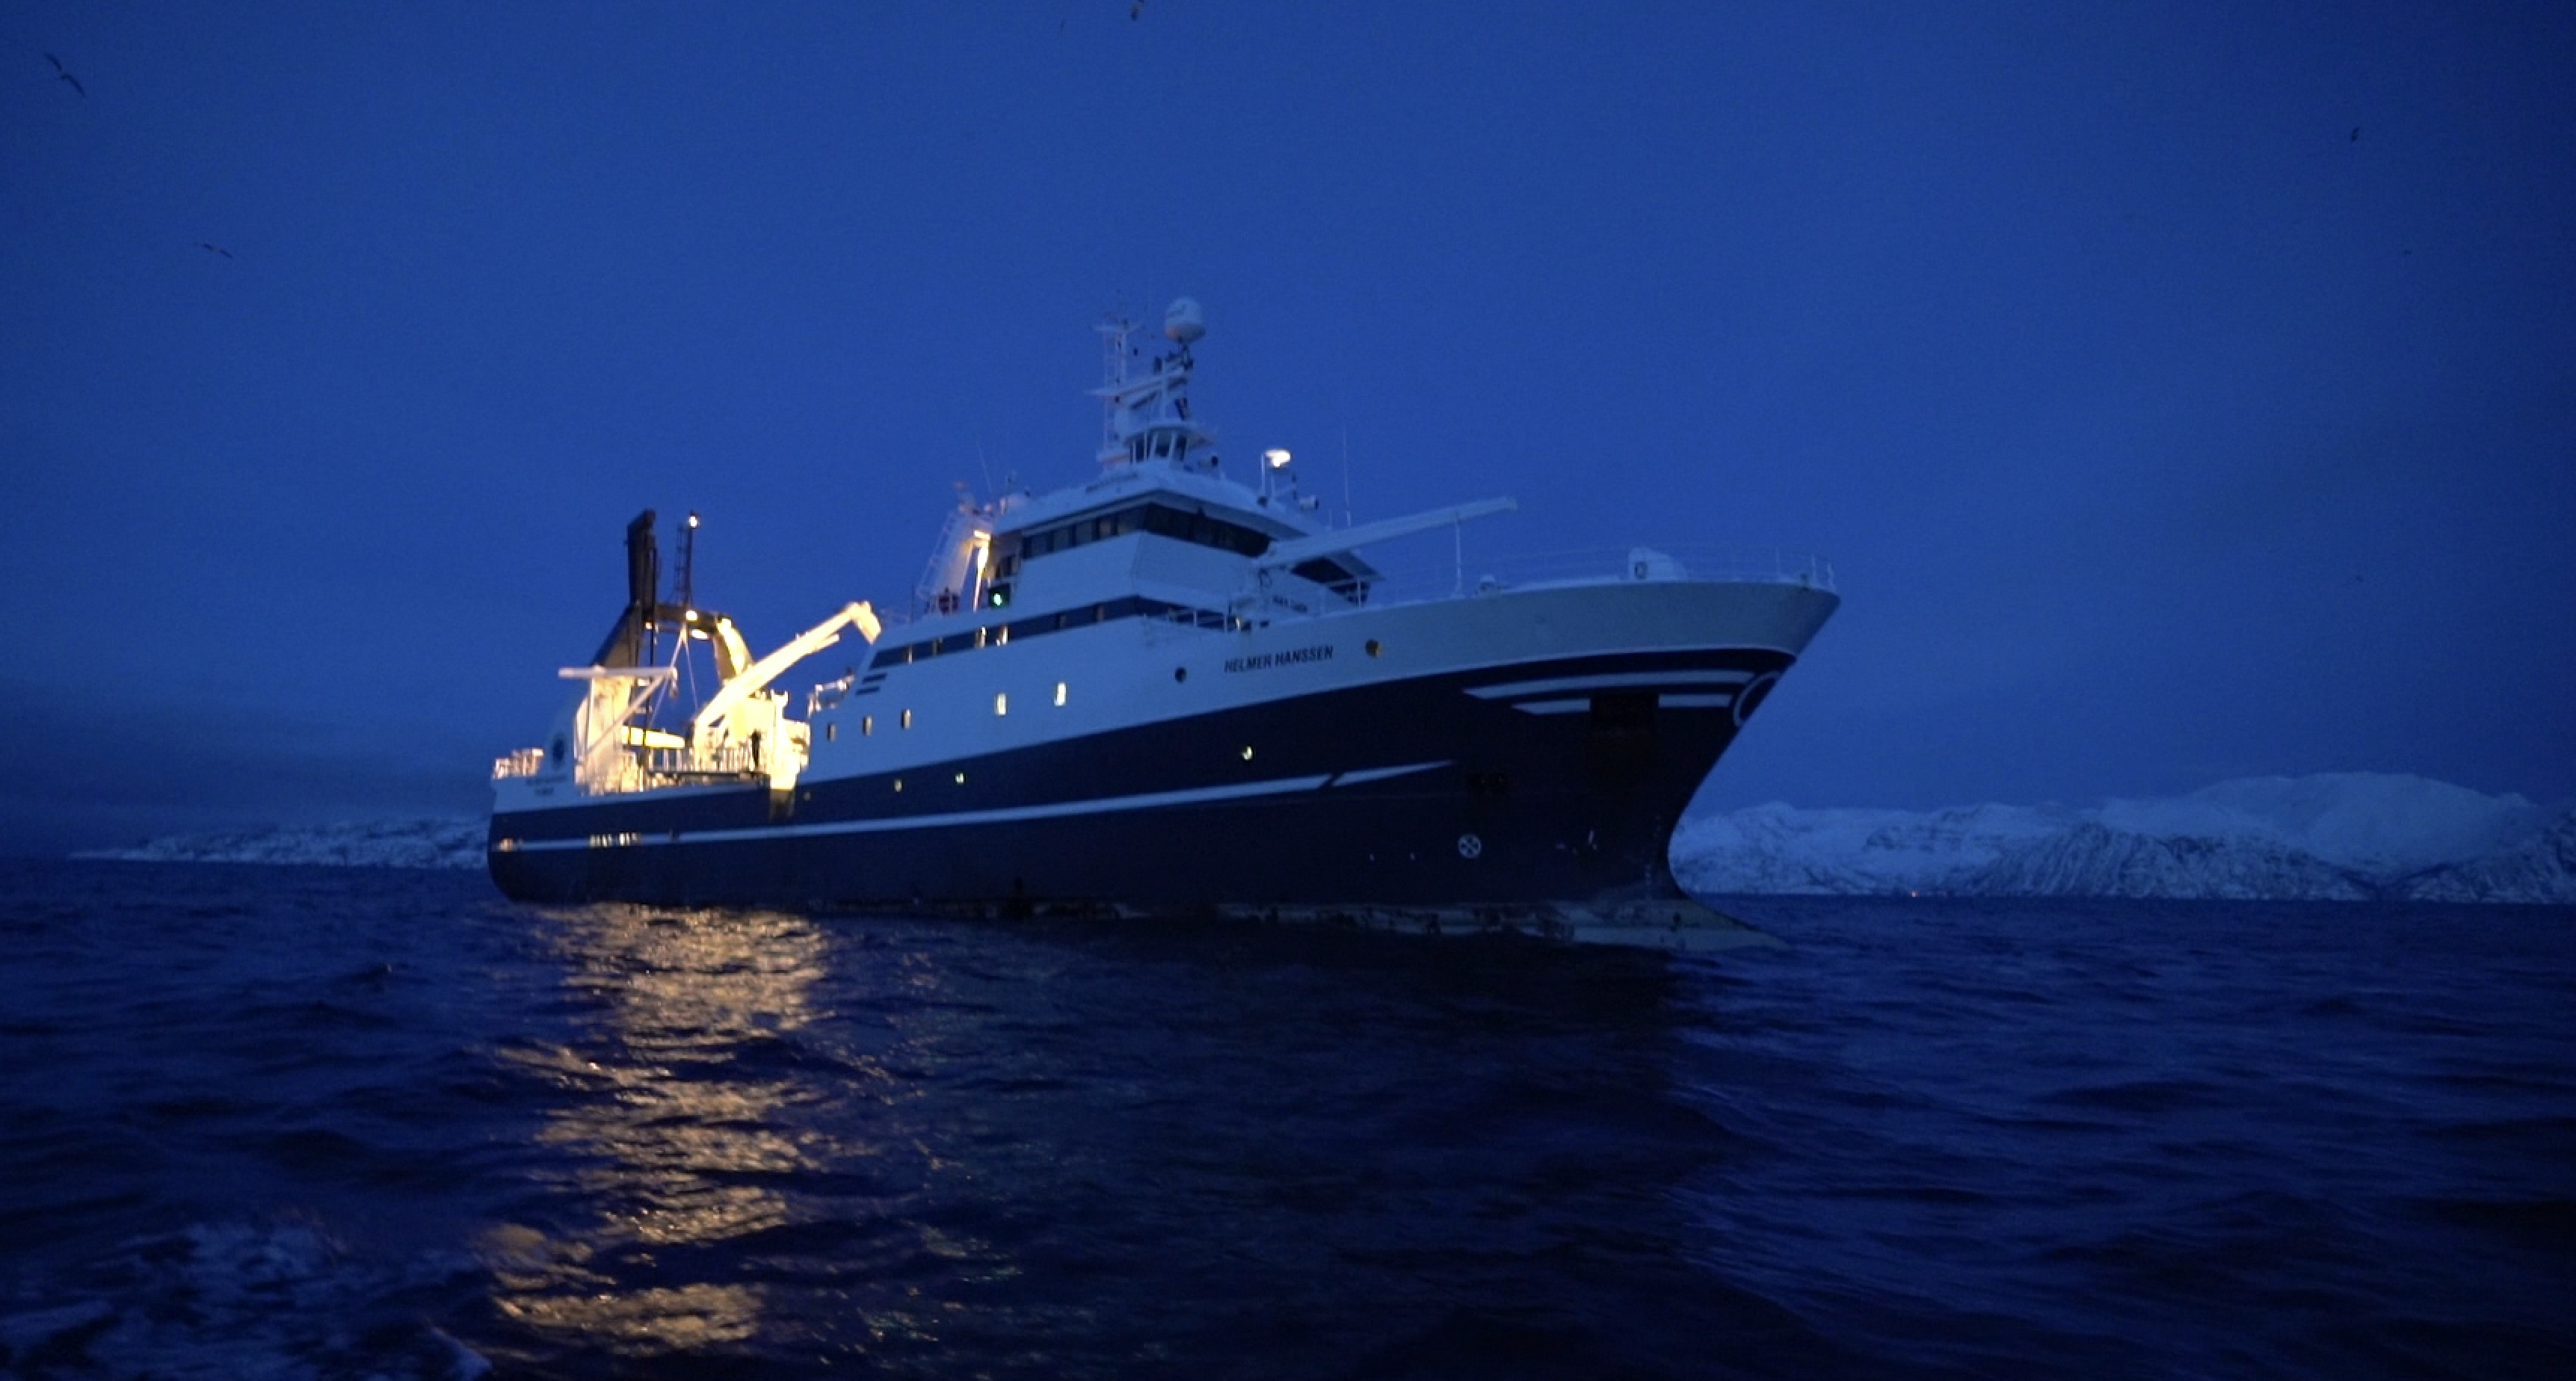 The Helmer Hanssen explored the Polar Night in January 2018. Screenshot from Vox.